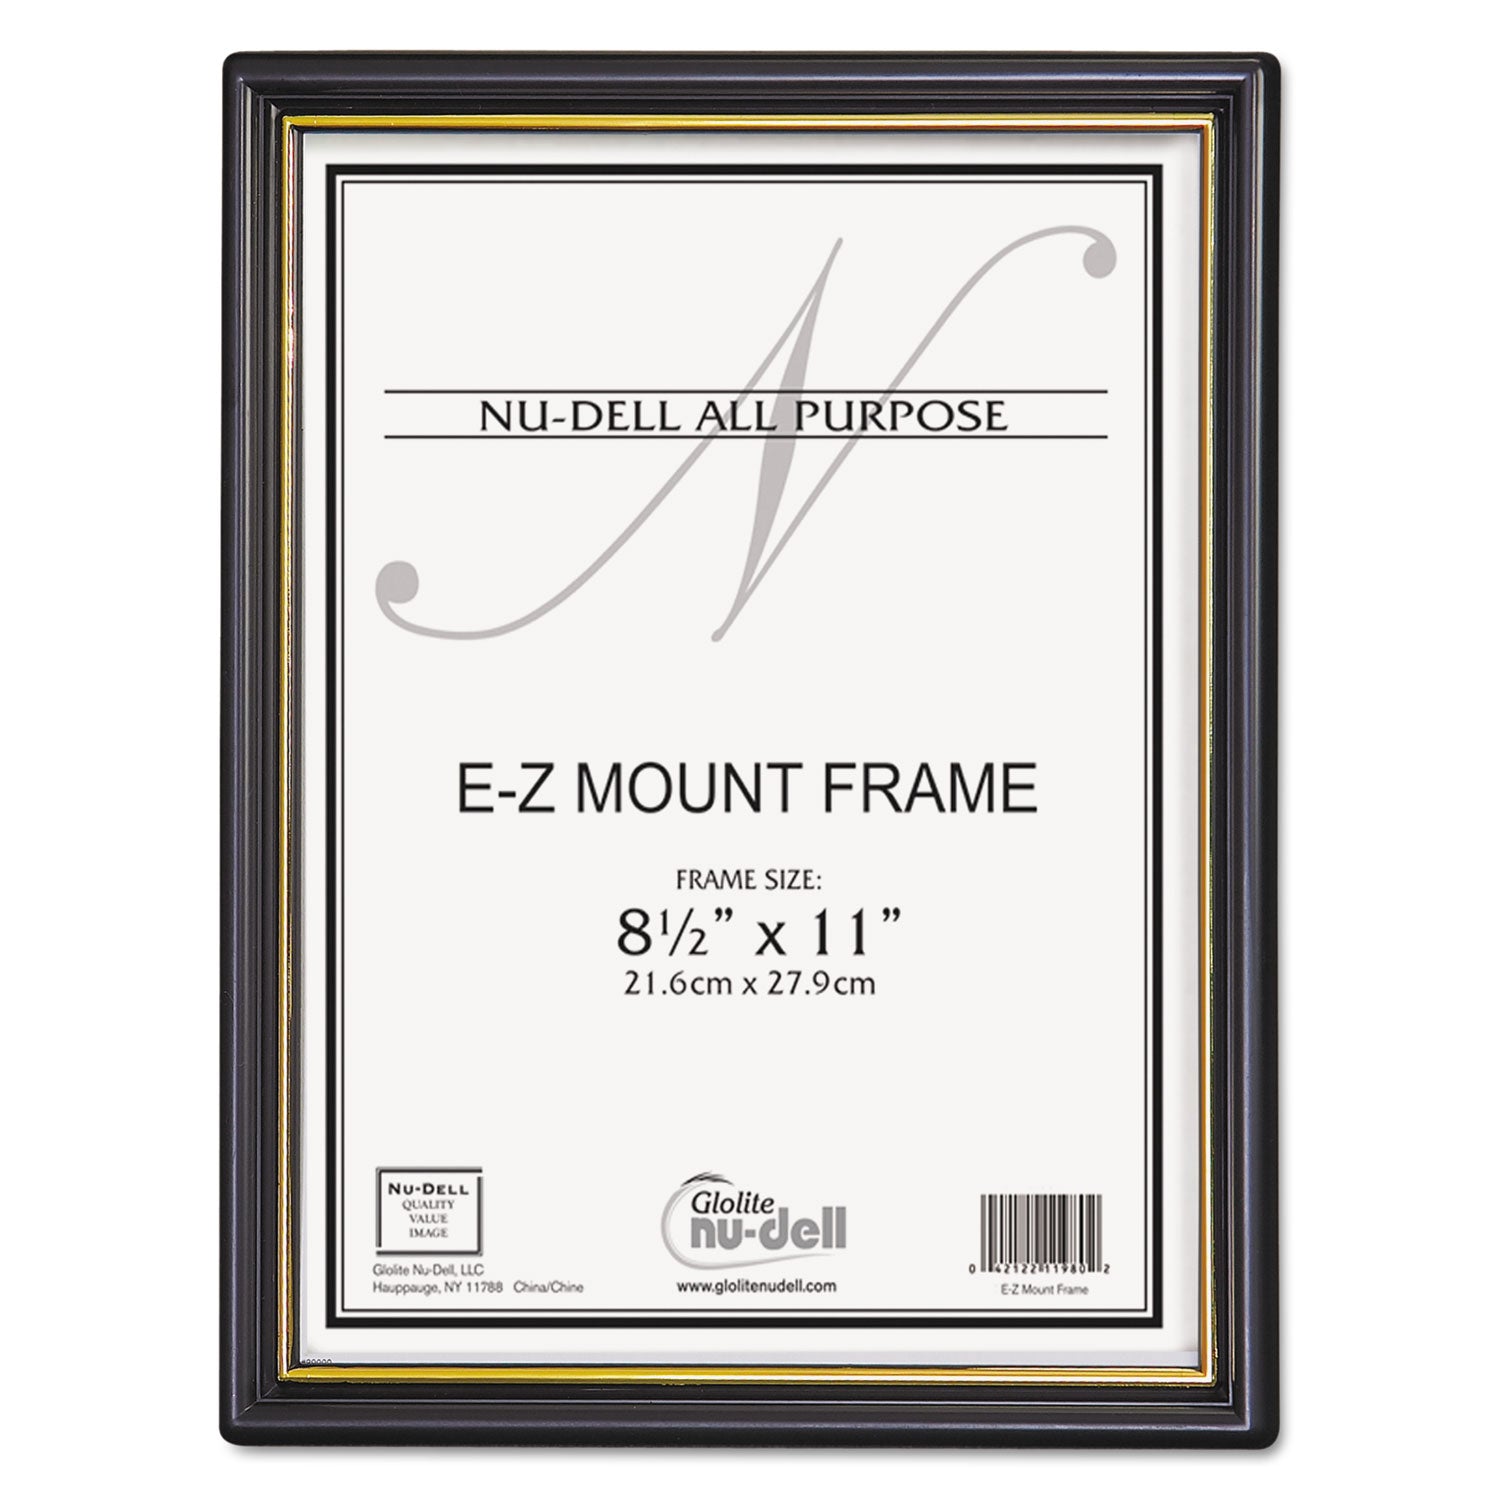 EZ Mount Document Frame with Trim Accent and Plastic Face, Plastic, 8.5 x 11 Insert, Black/Gold, 18/Carton - 